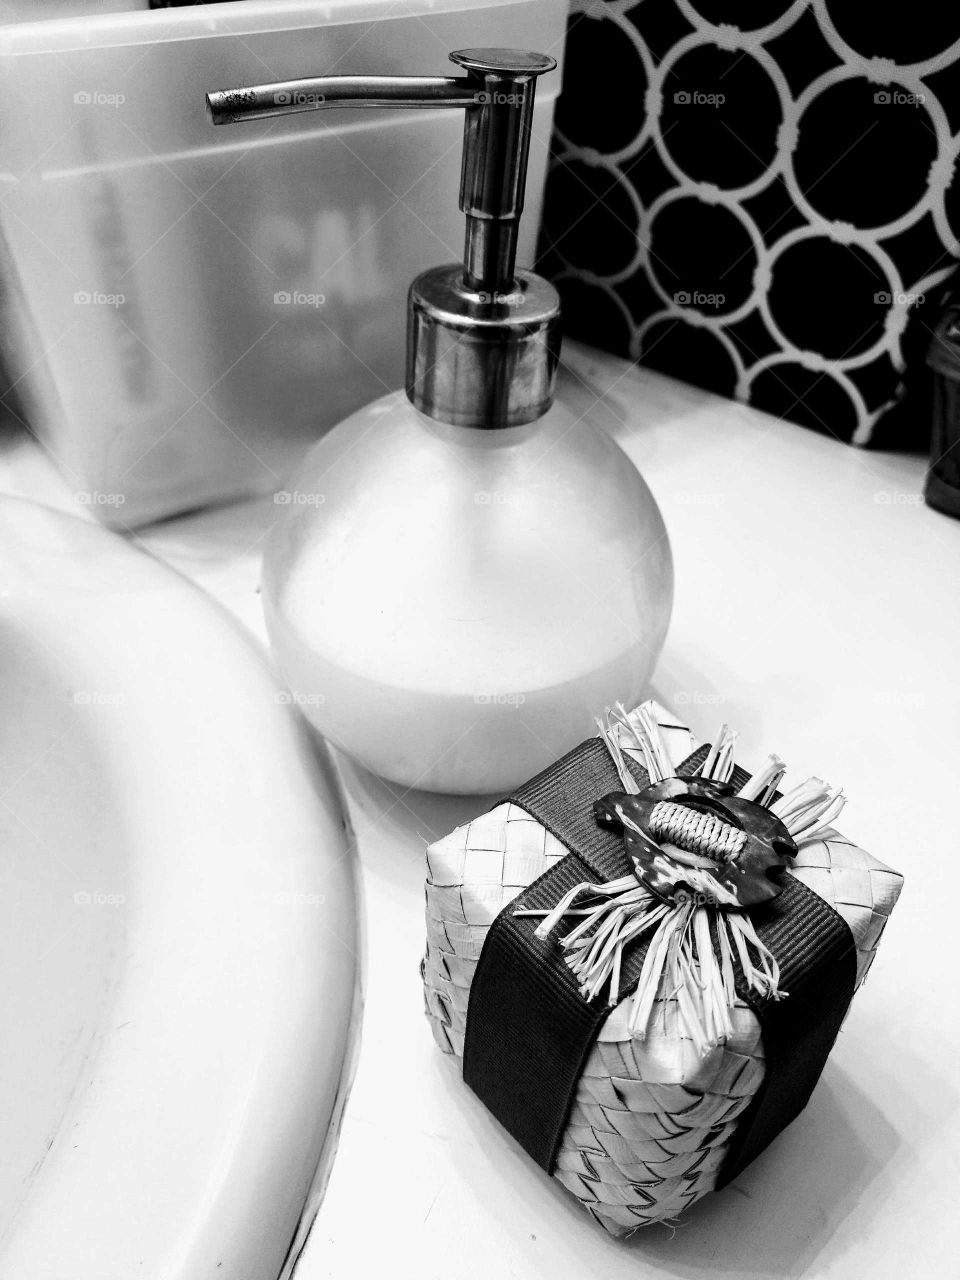 soap, sink, black and white, dispenser